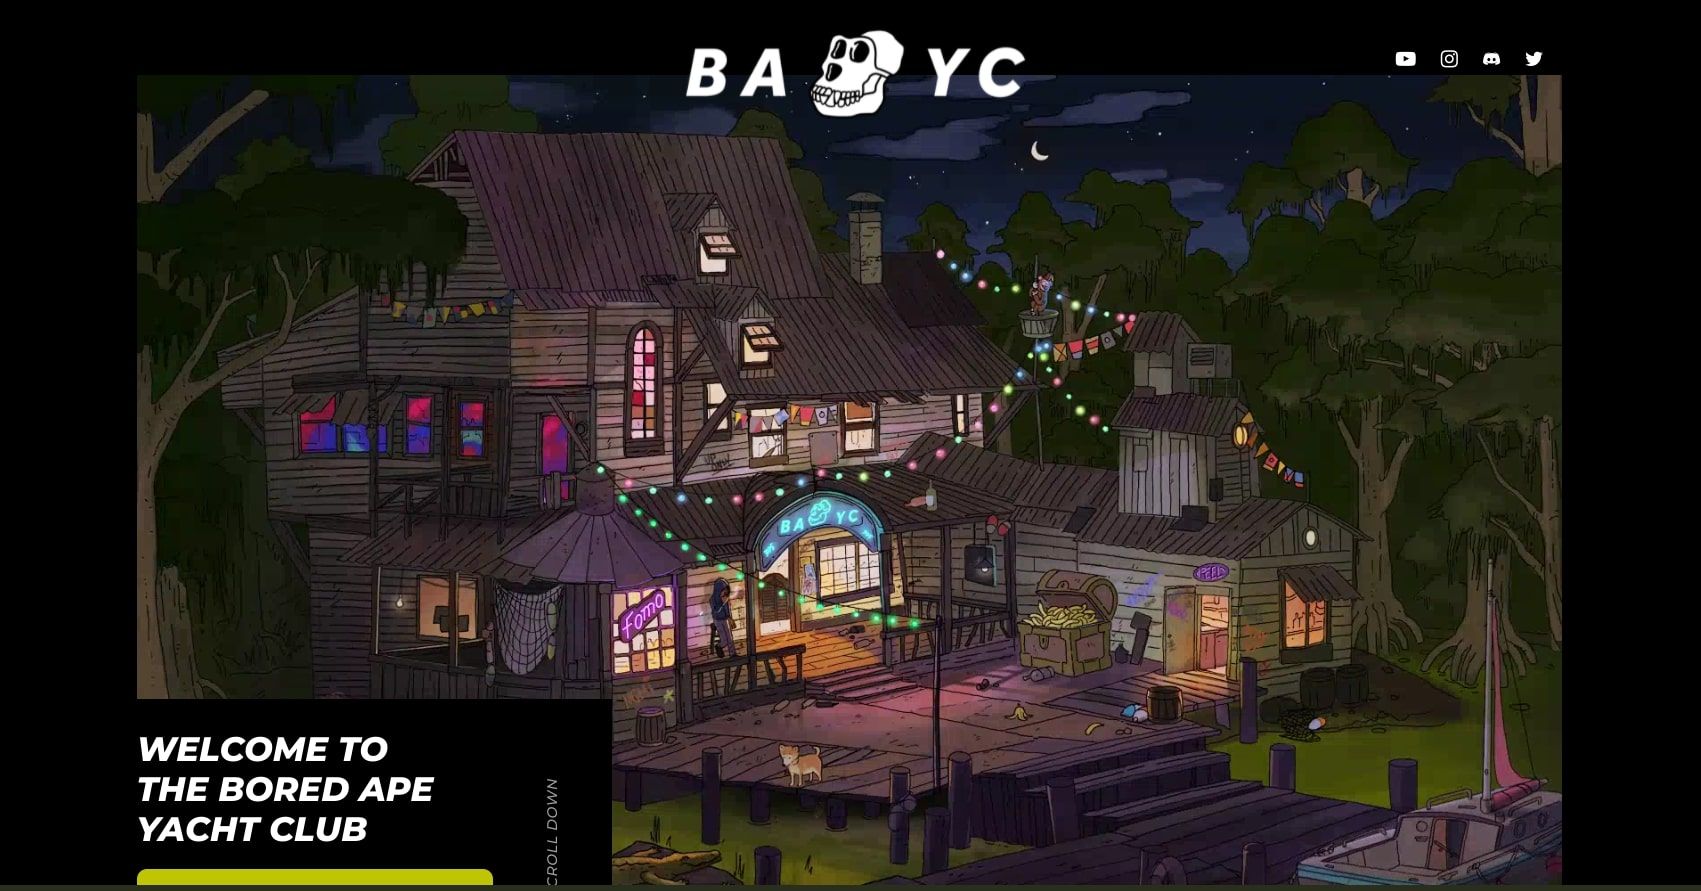 BAYC website screenshot